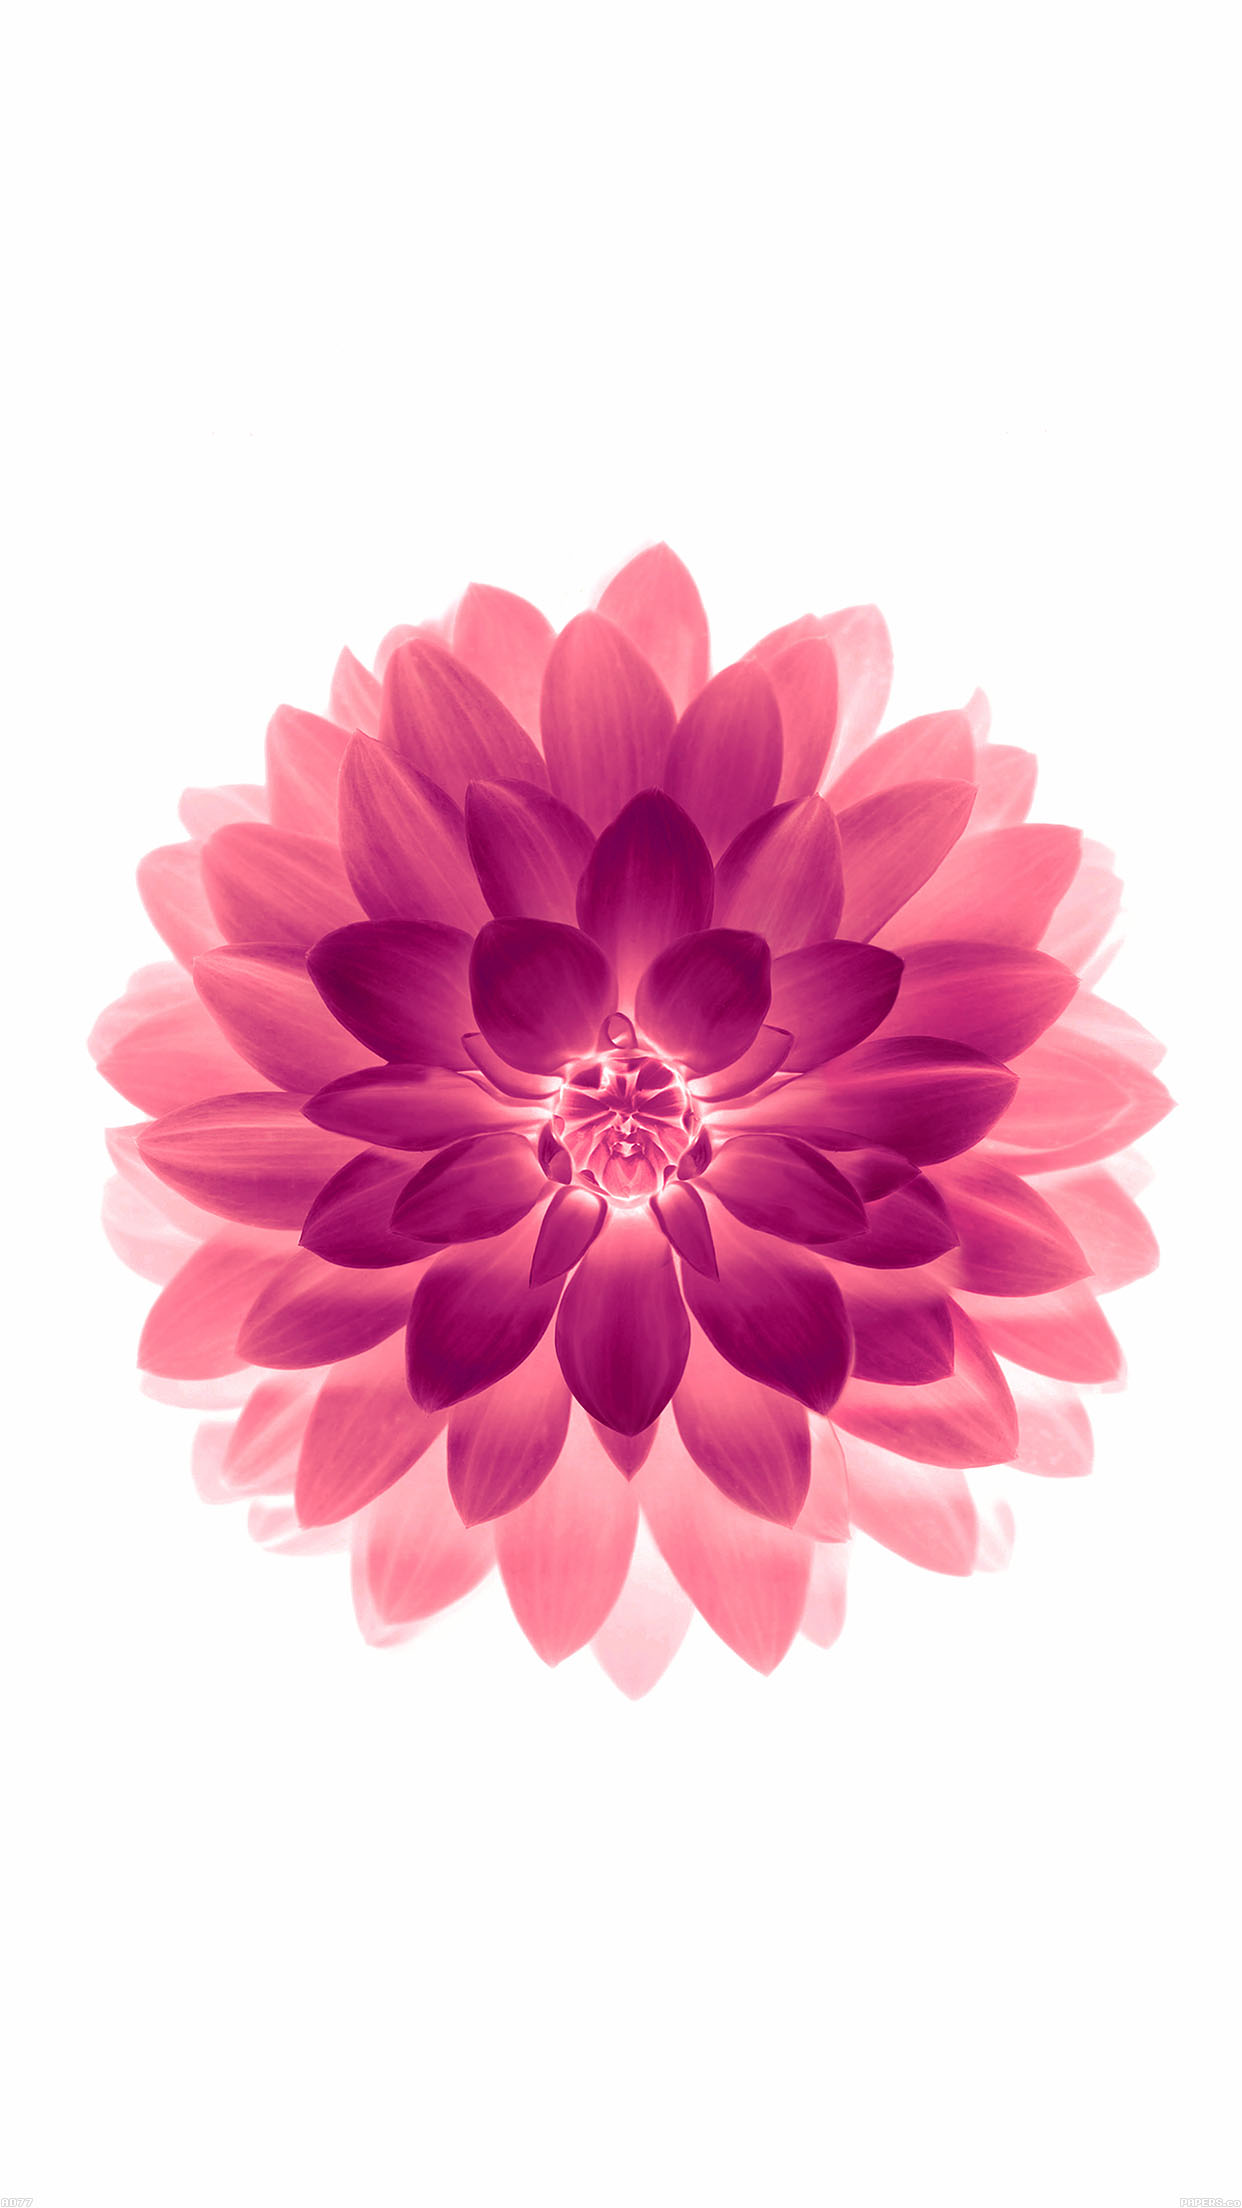 flor de loto fondo de pantalla para iphone,rosado,pétalo,flor,dalia,planta